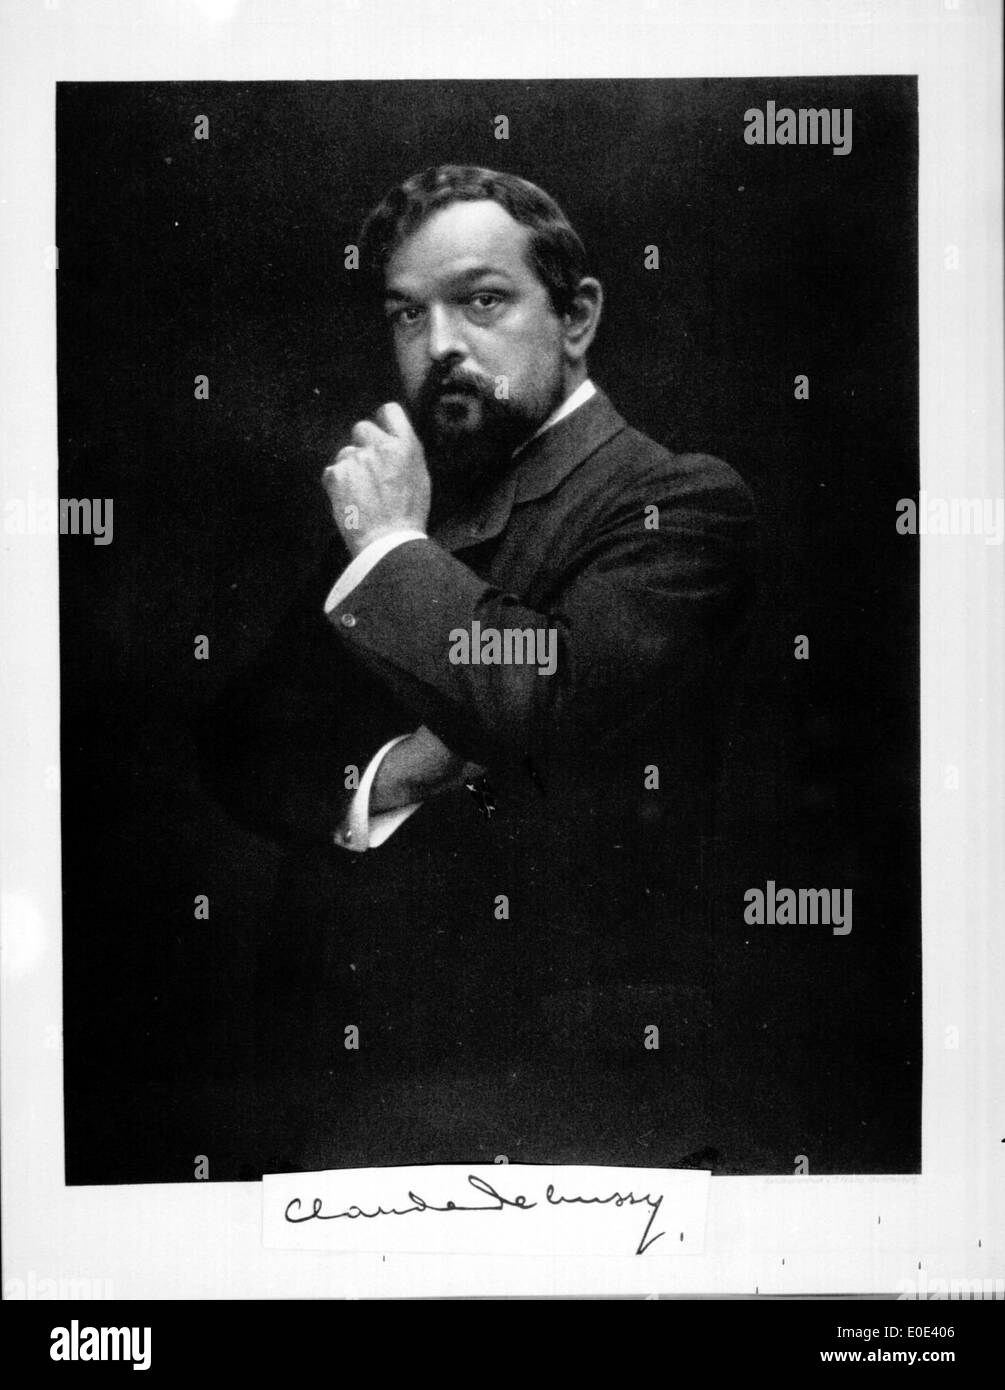 Claude Debussy portrait Stock Photo